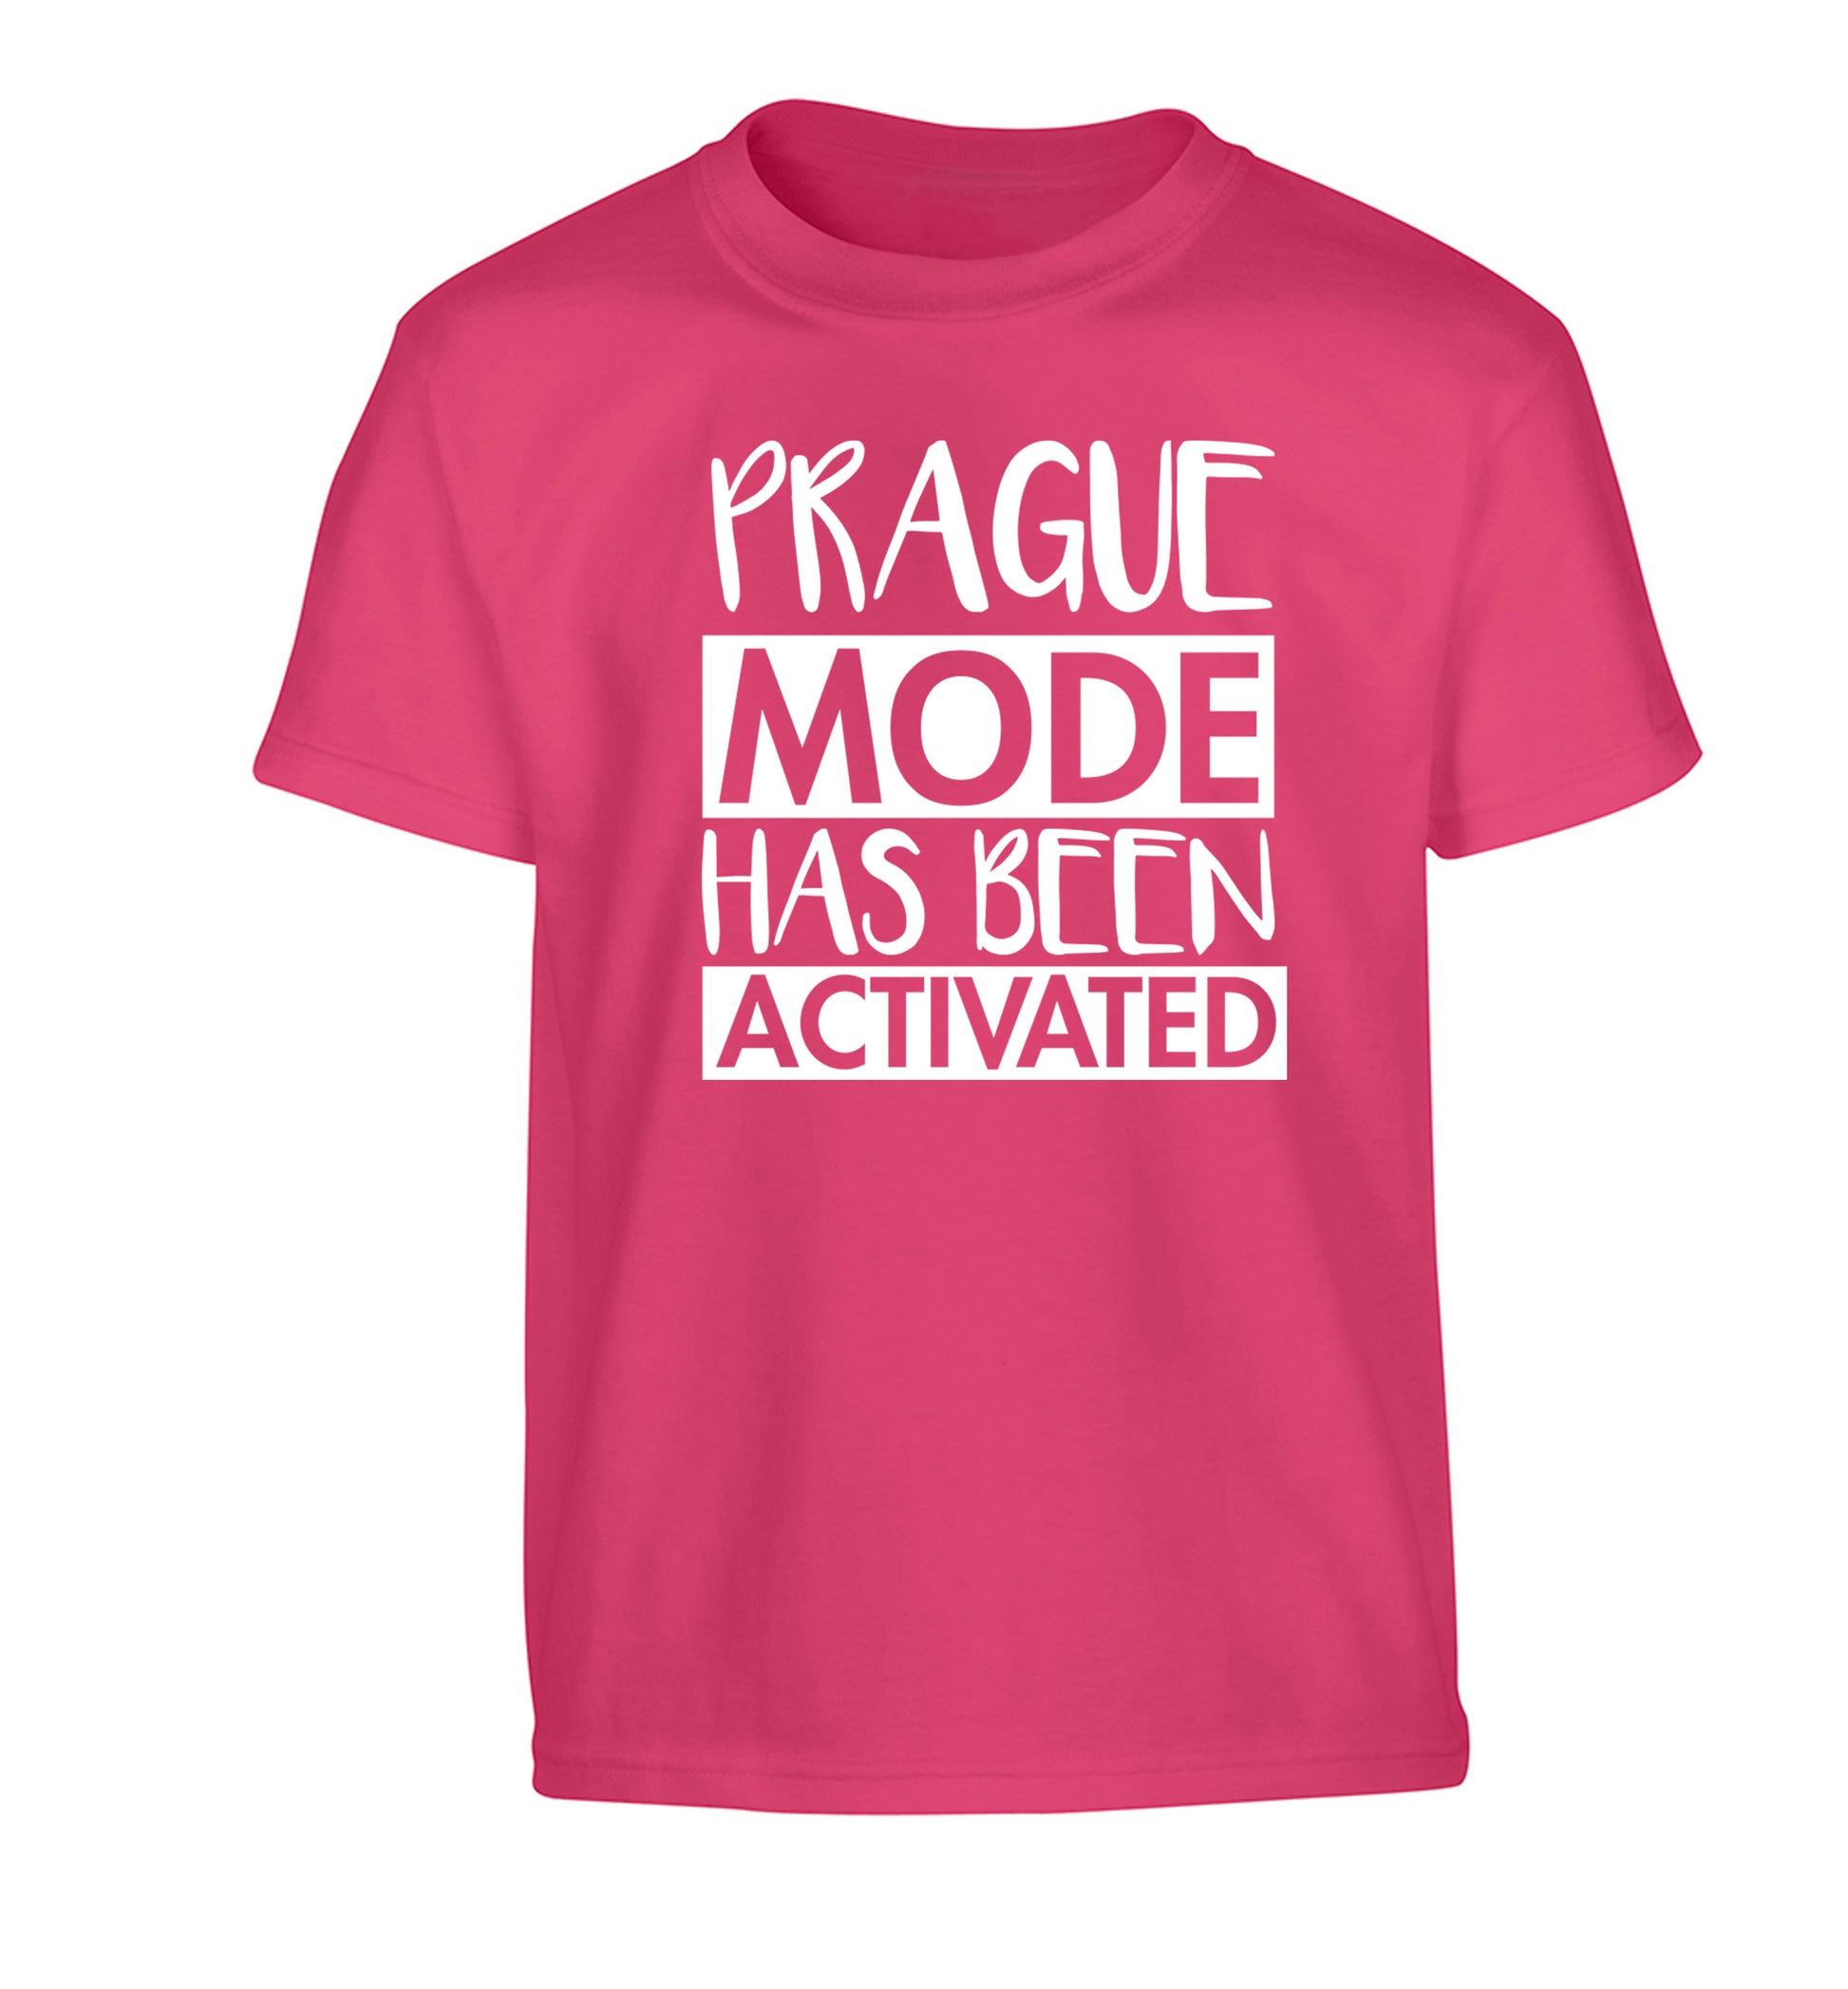 Prague mode has been activated Children's pink Tshirt 12-13 Years